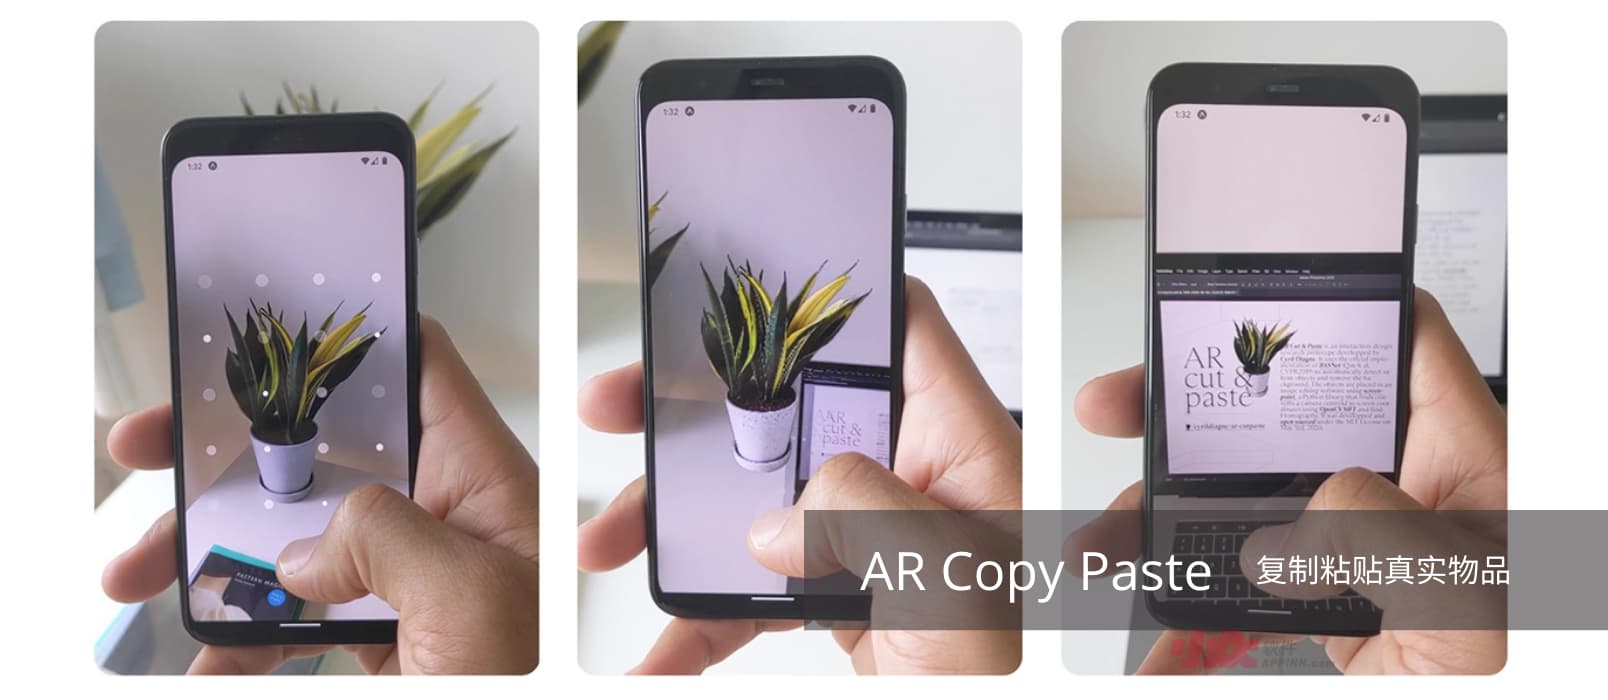 AR Copy Paste - 用 AR 复制粘贴真实物品到电脑中，支持 iPhone 与 Android 1